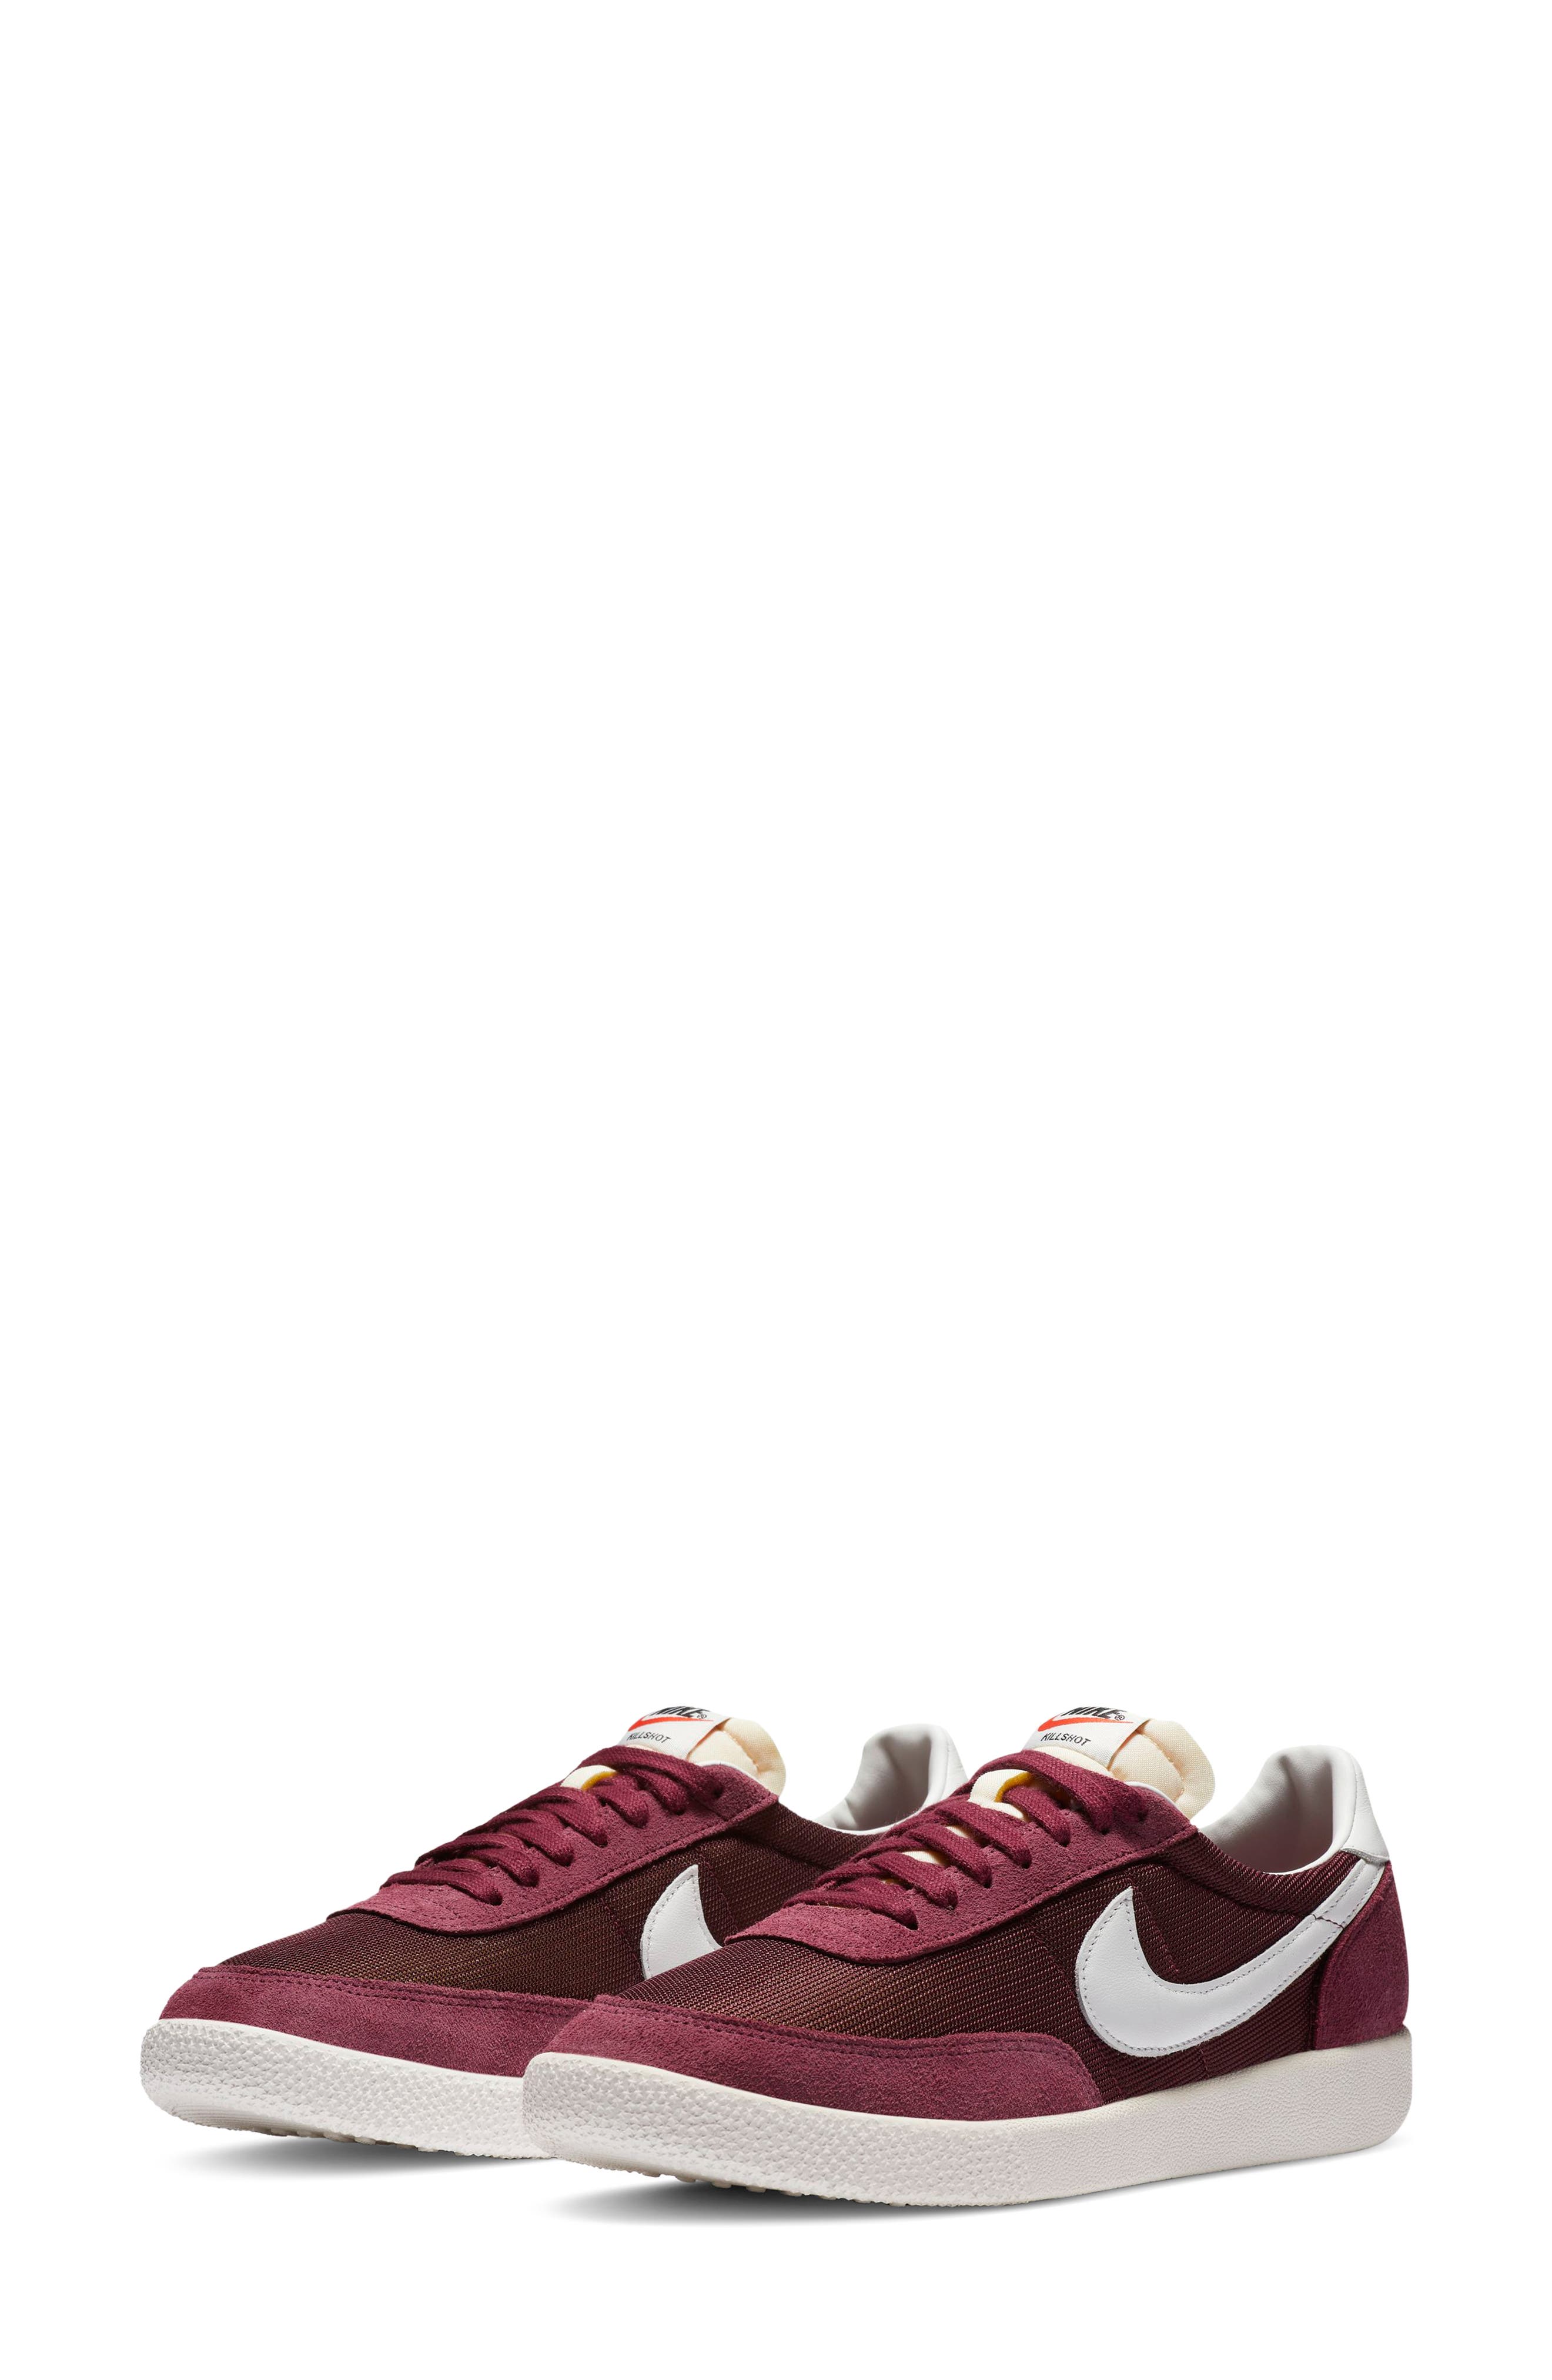 mens burgundy athletic shoes